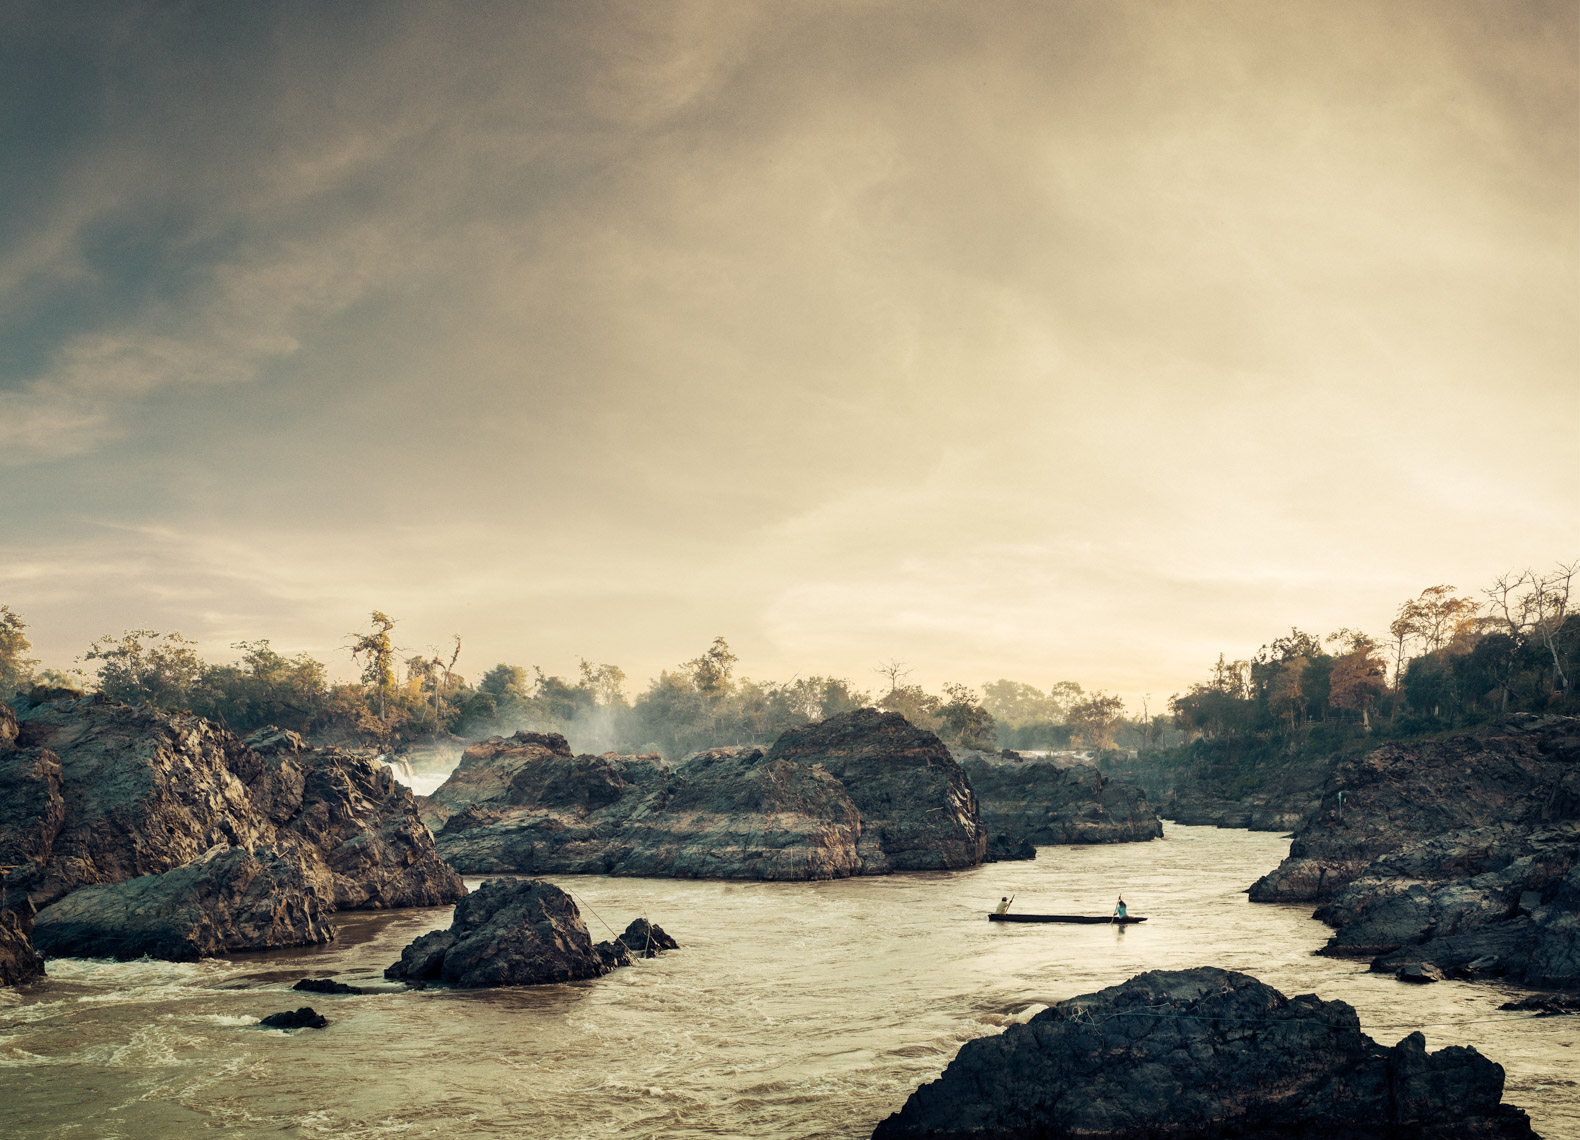 4000 Islands, Laos